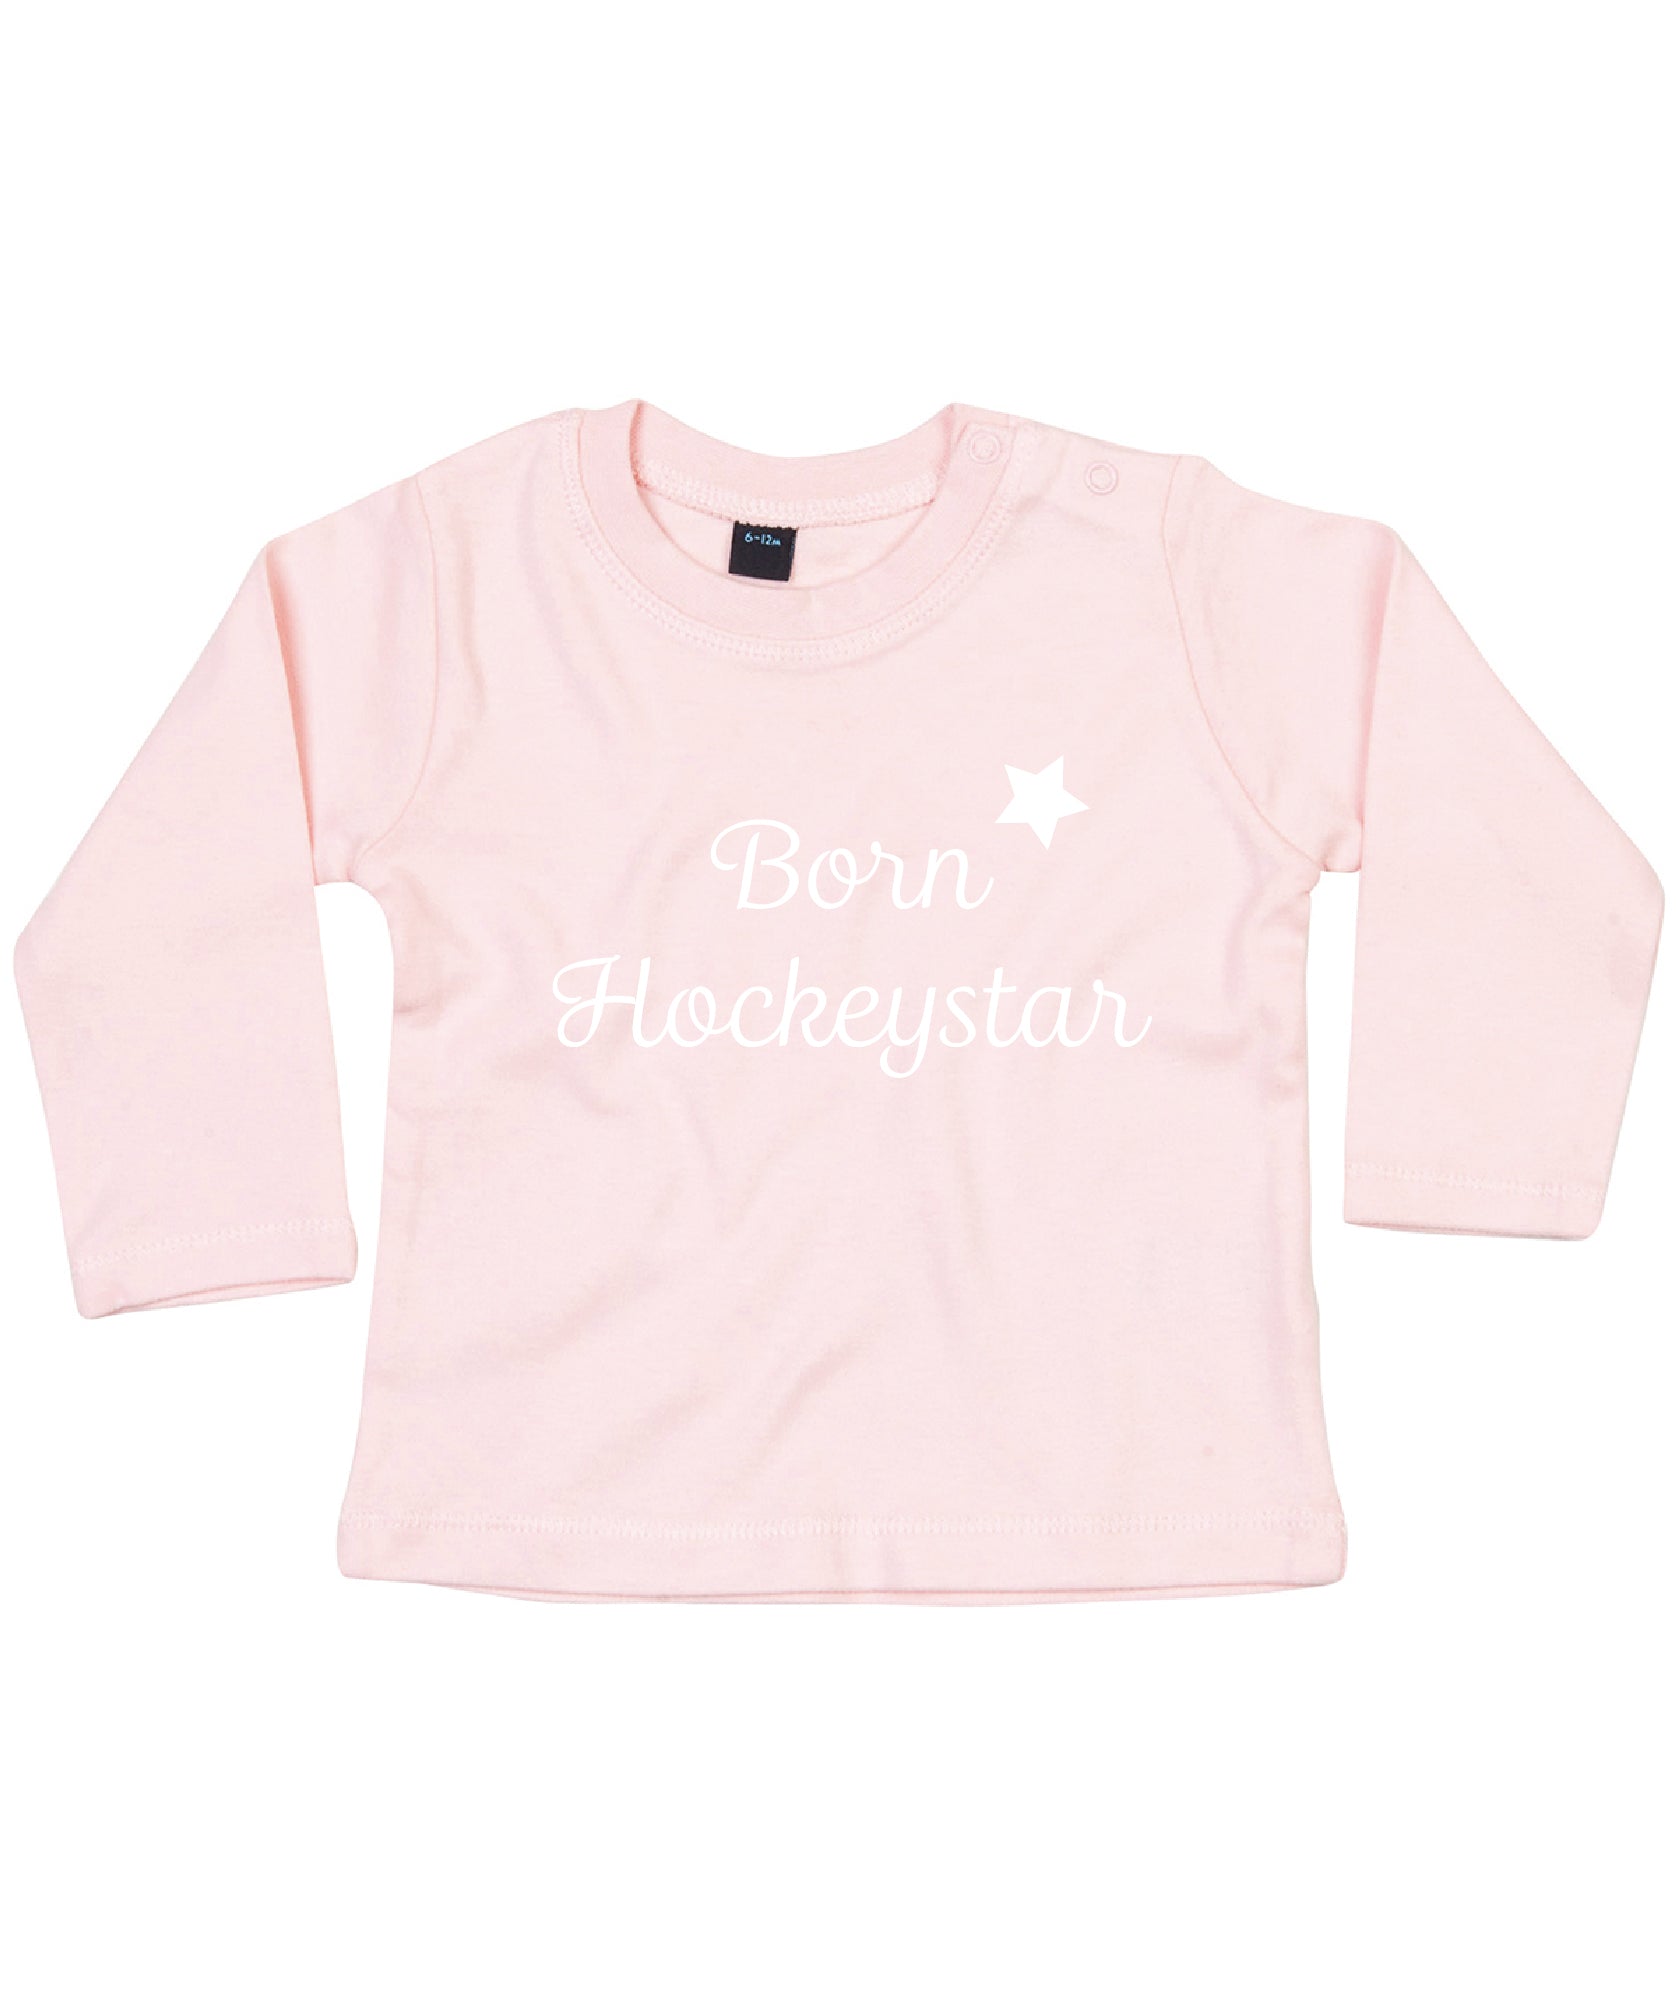 Baby Longsleeve Shirt Born Hockeystar